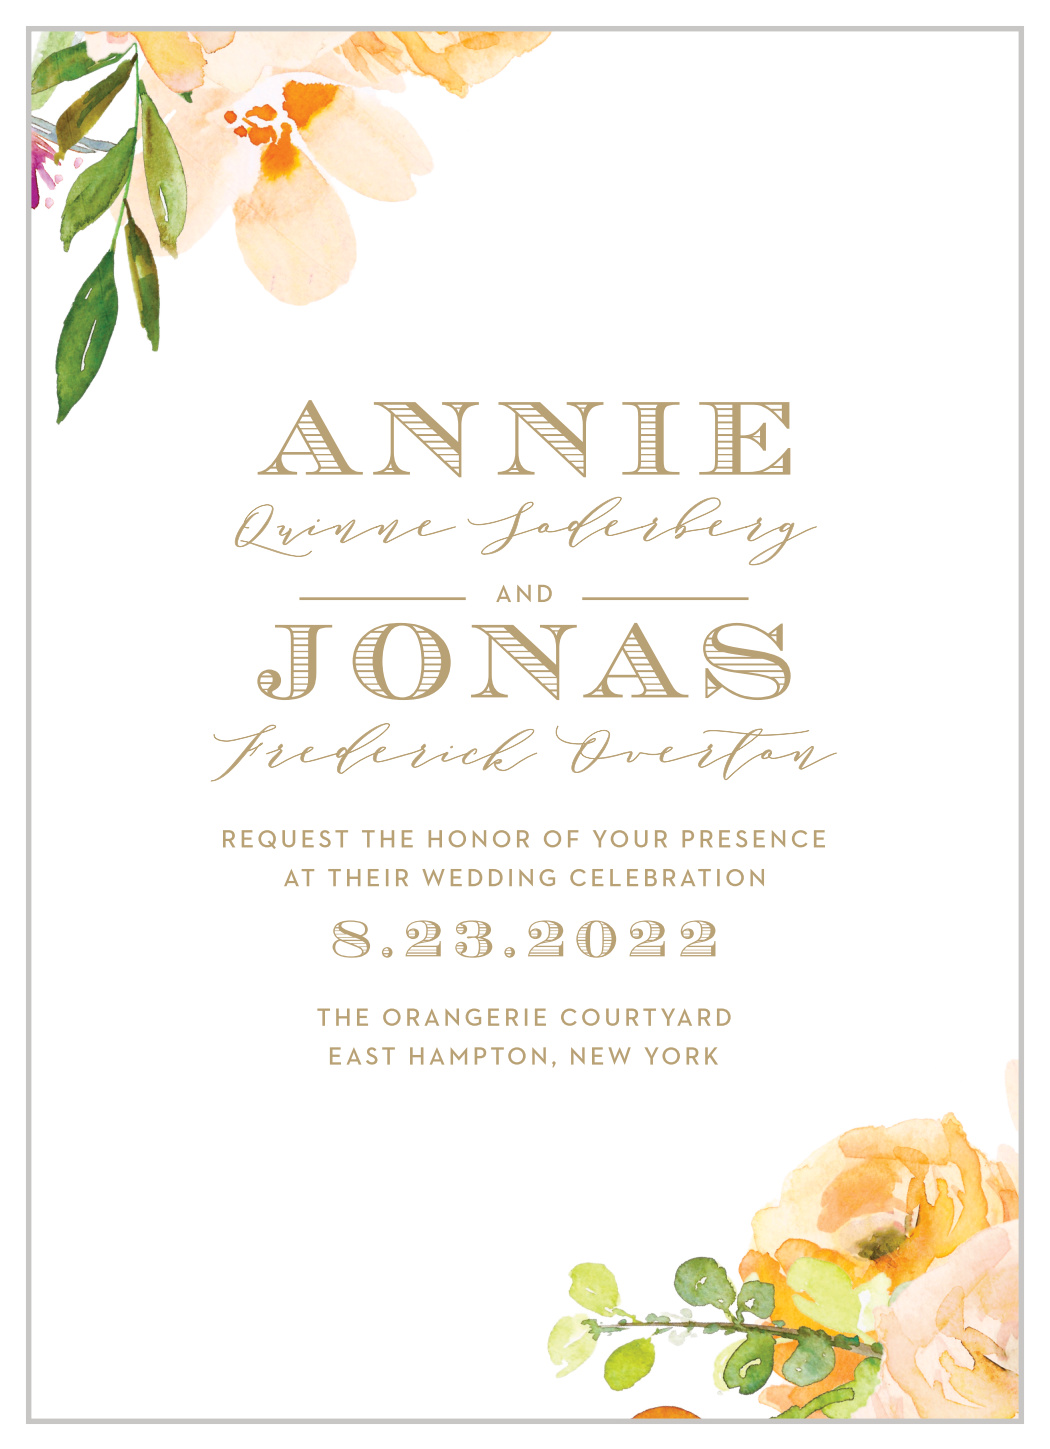 Peachy Flowers Wedding Invitations